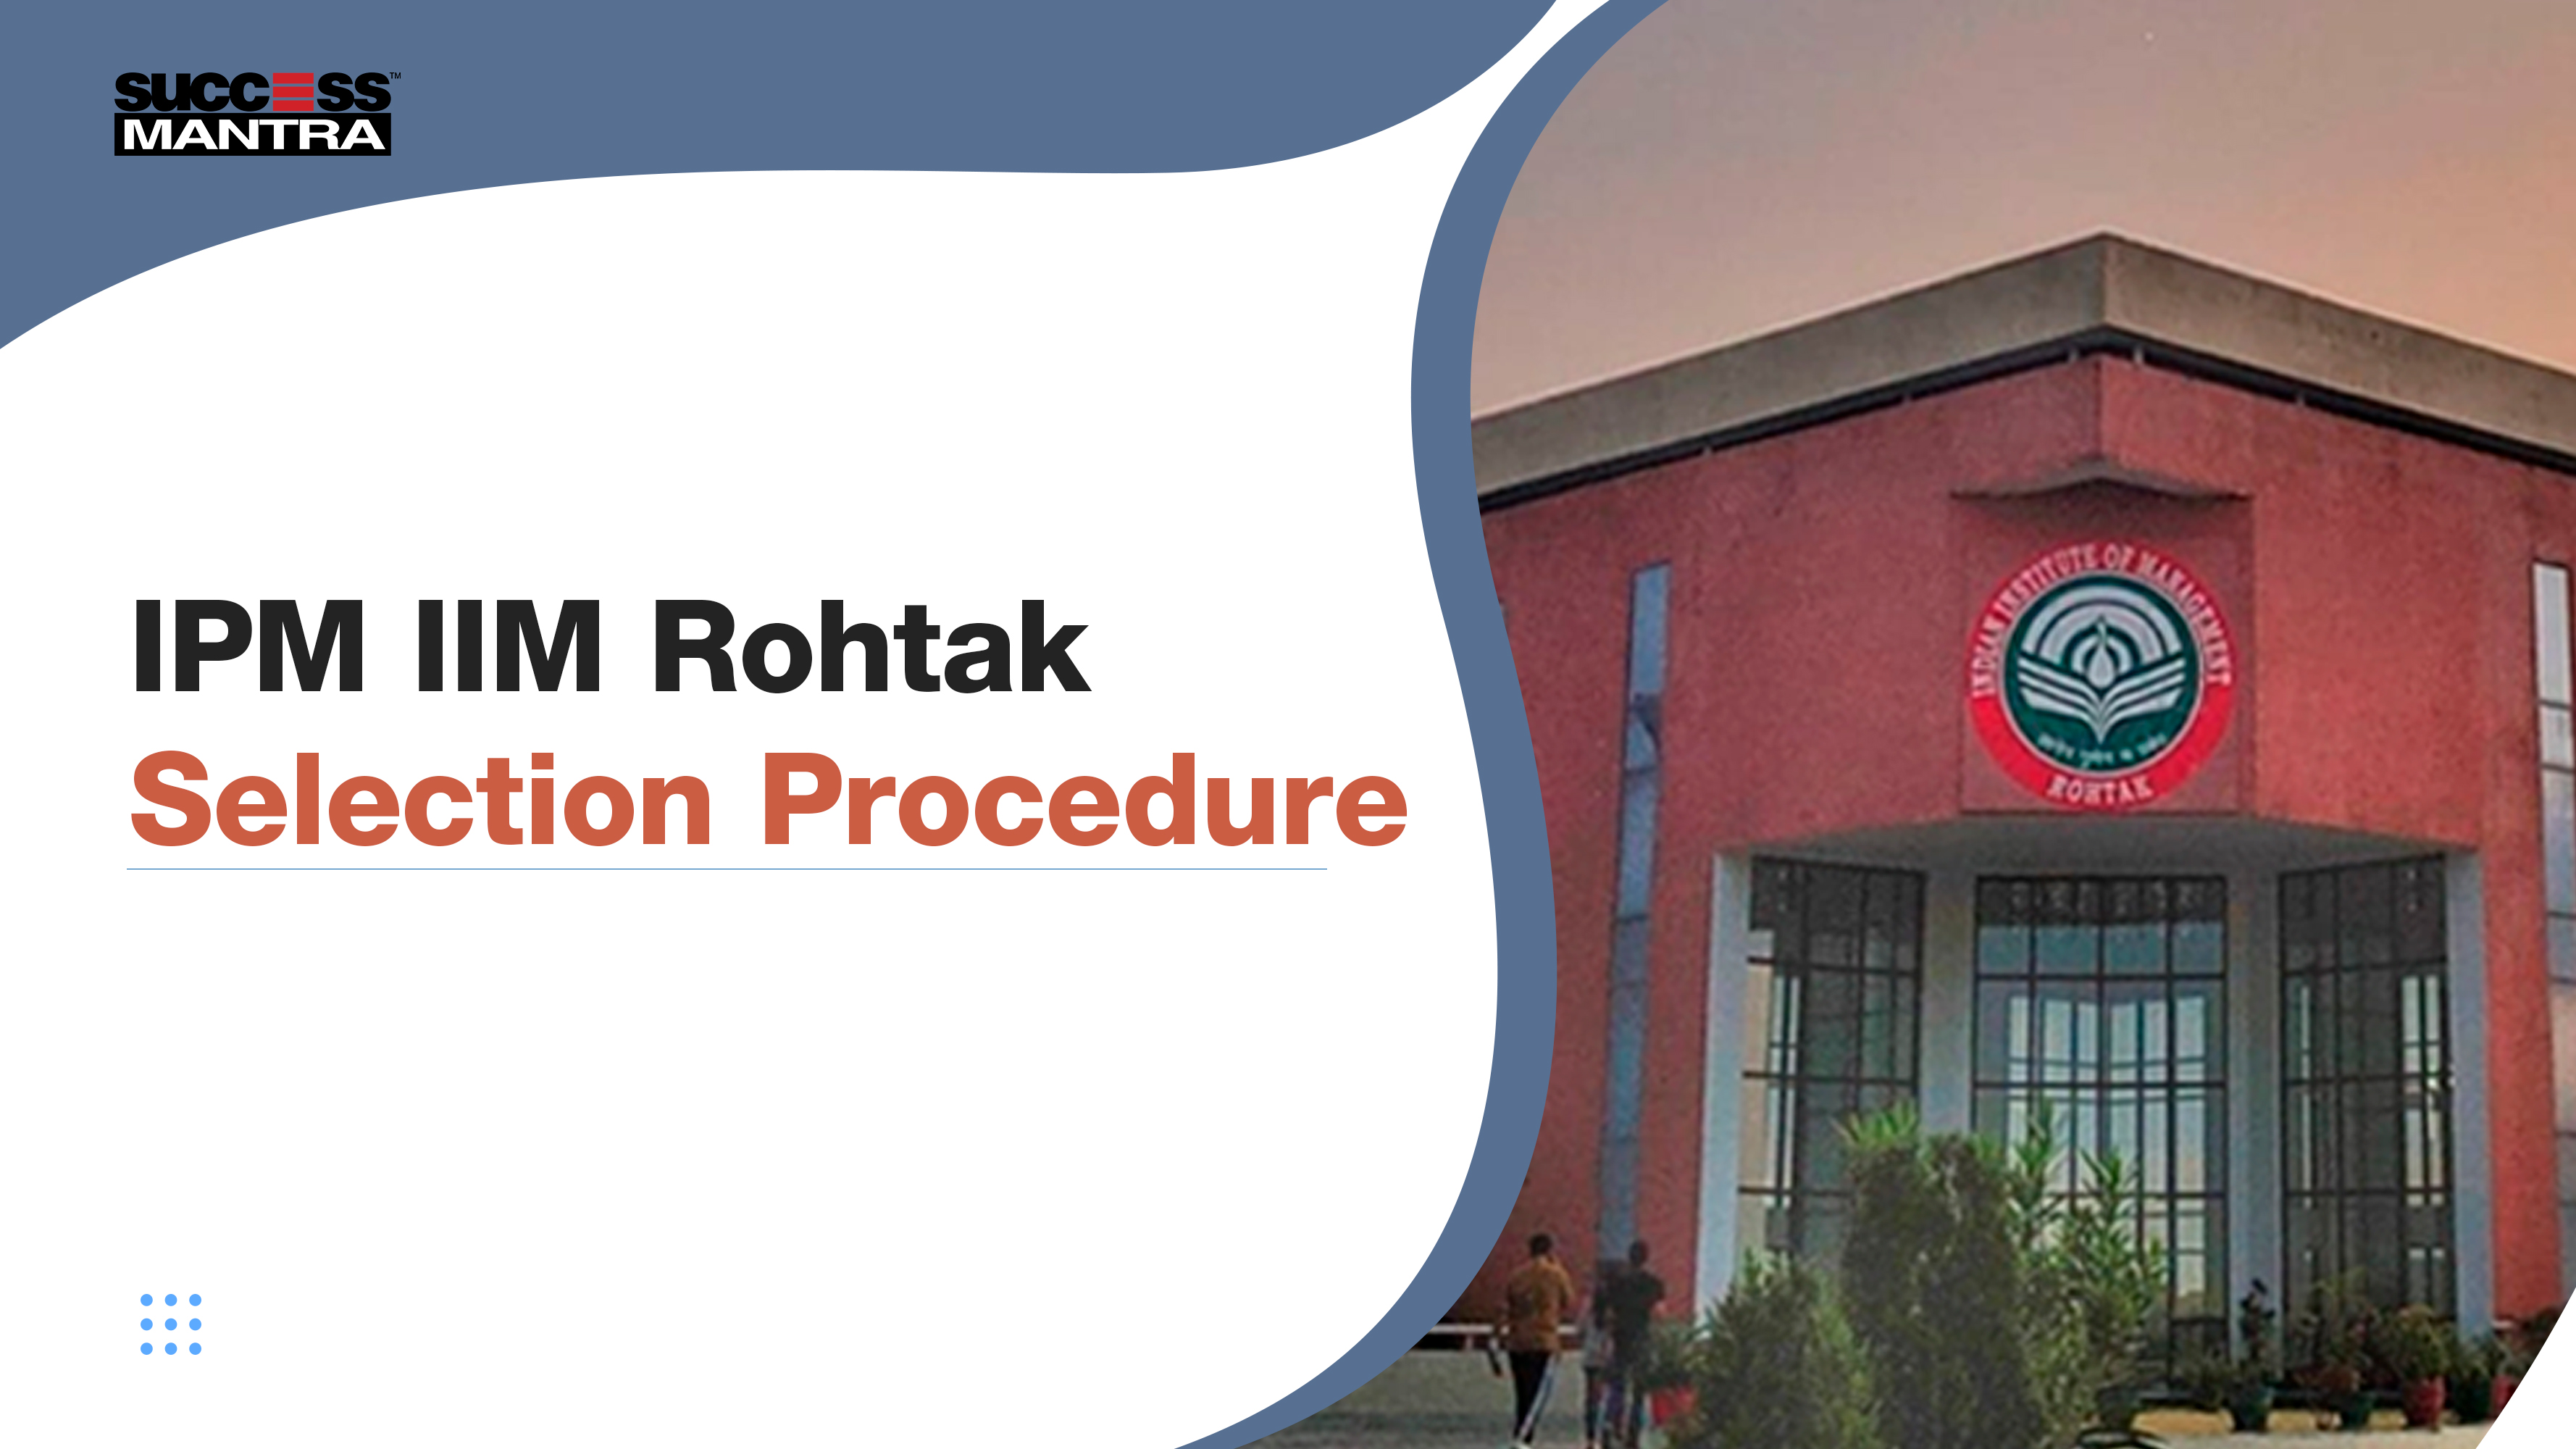 IPM IIM Rohtak Selection Procedure, Success Mantra Coaching Institute, Best Coaching Institute For BBA Located In GTB Nagar Delhi 